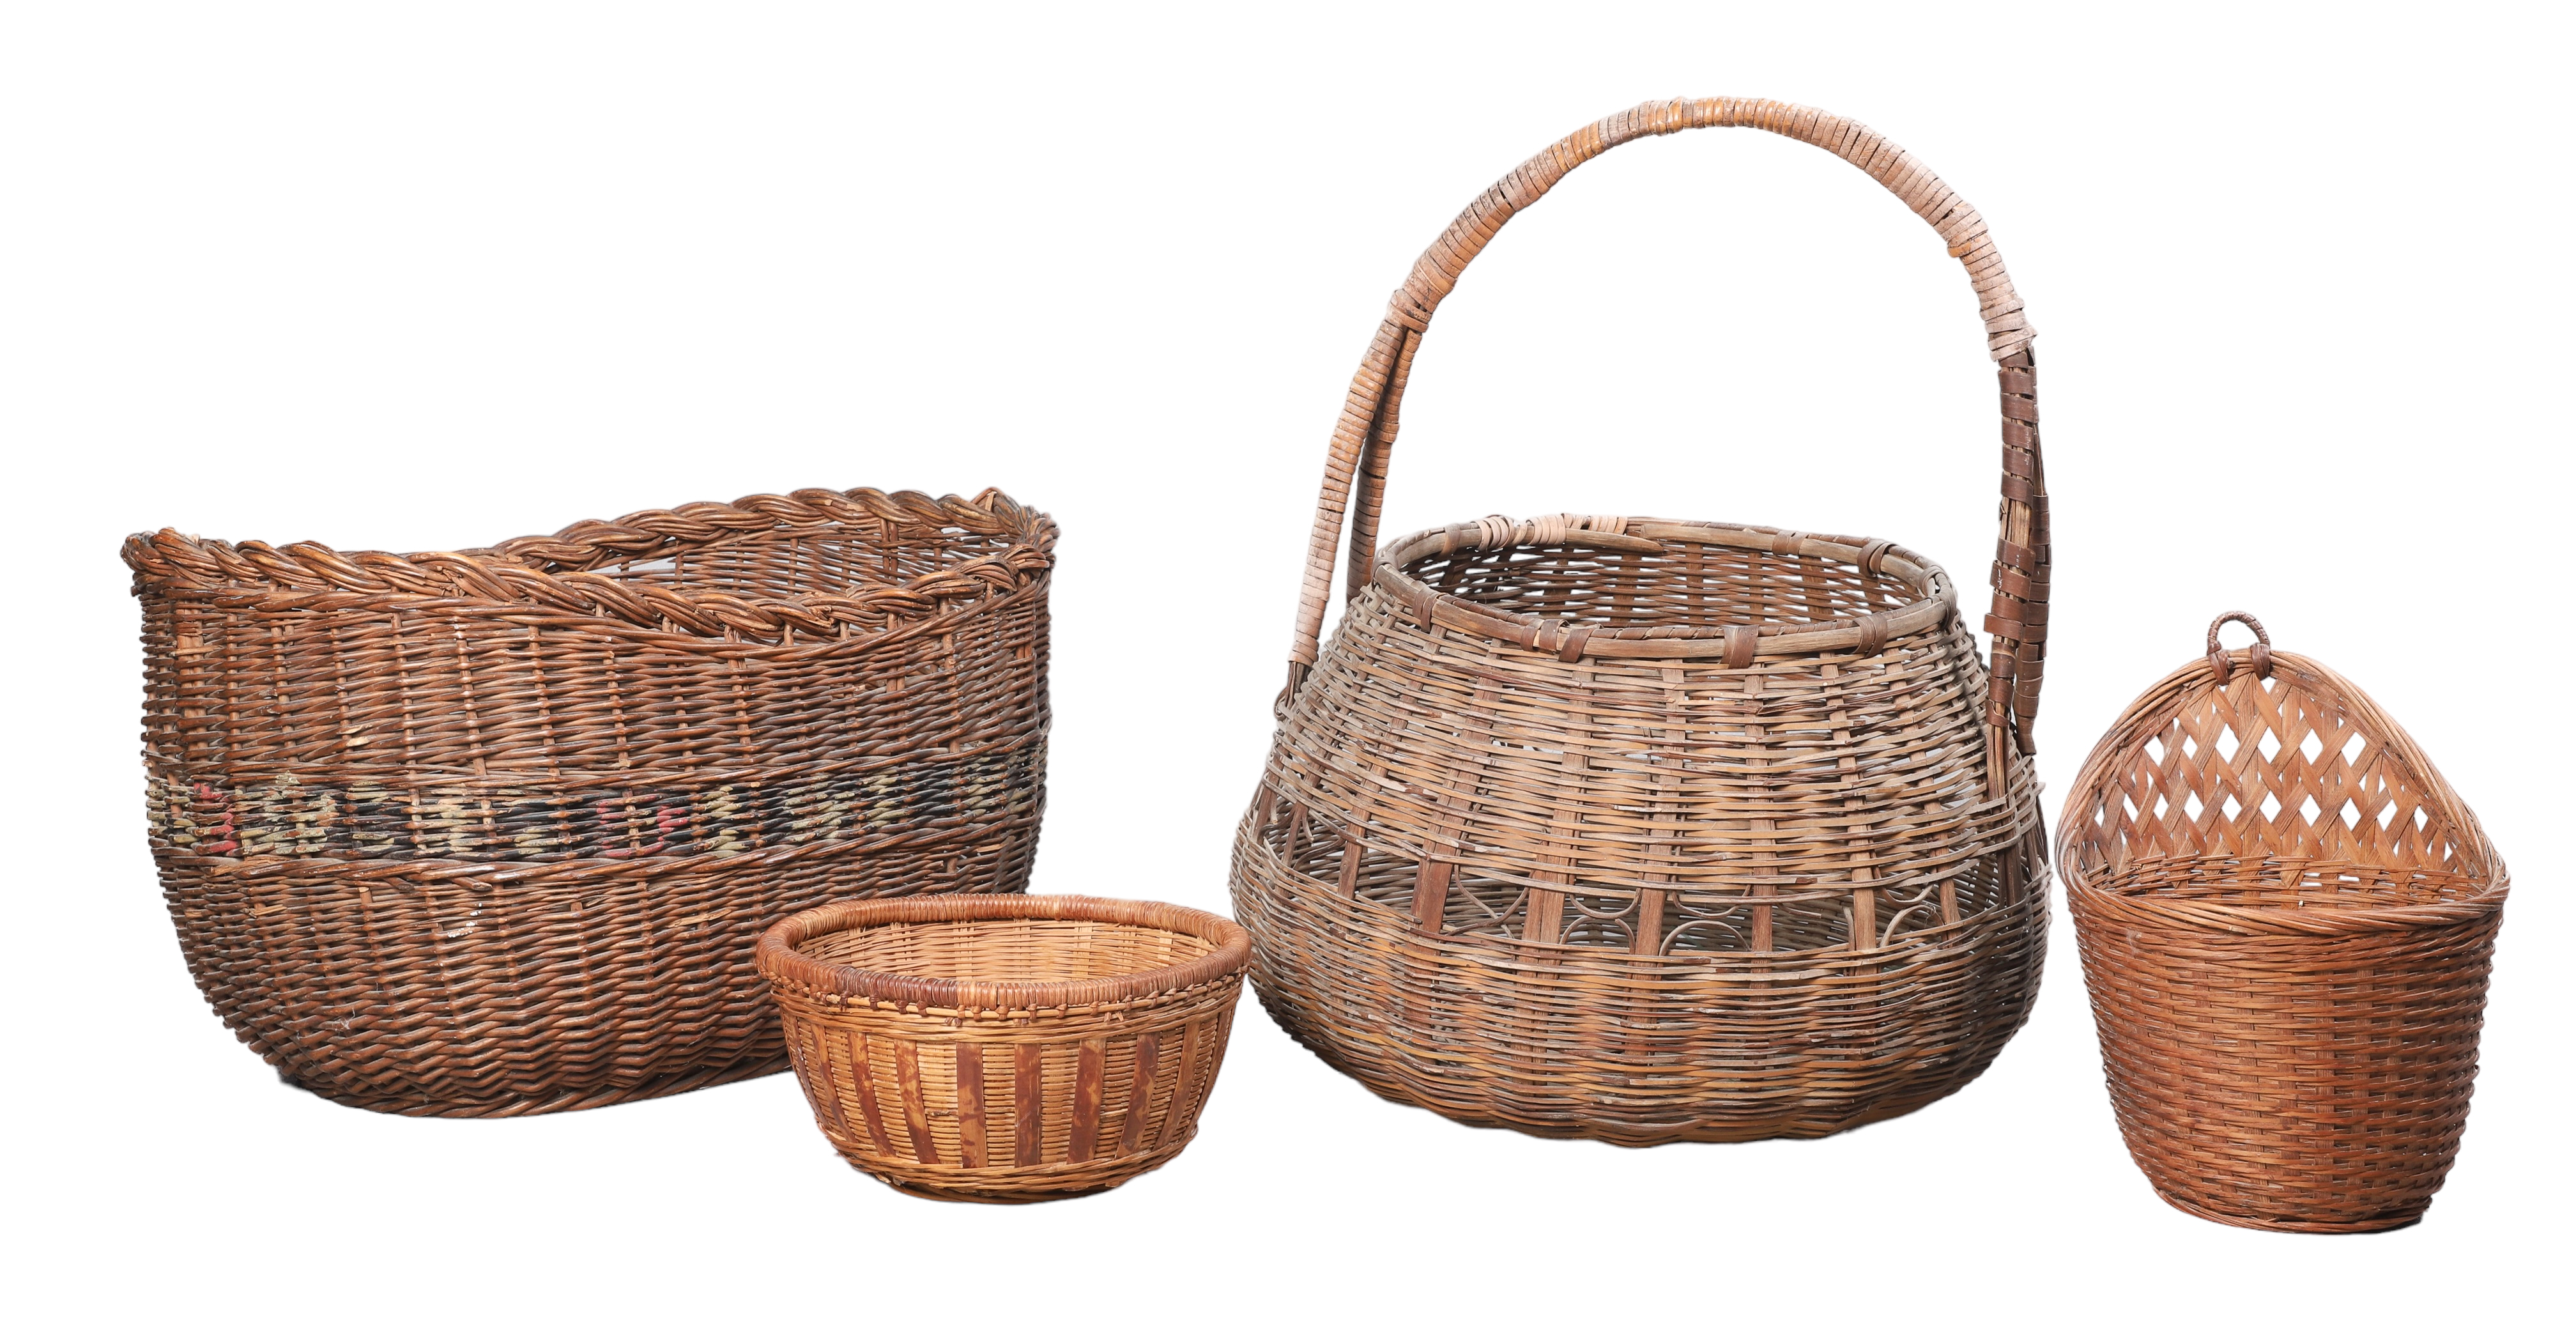  4 Woven baskets to include woven 2e1541